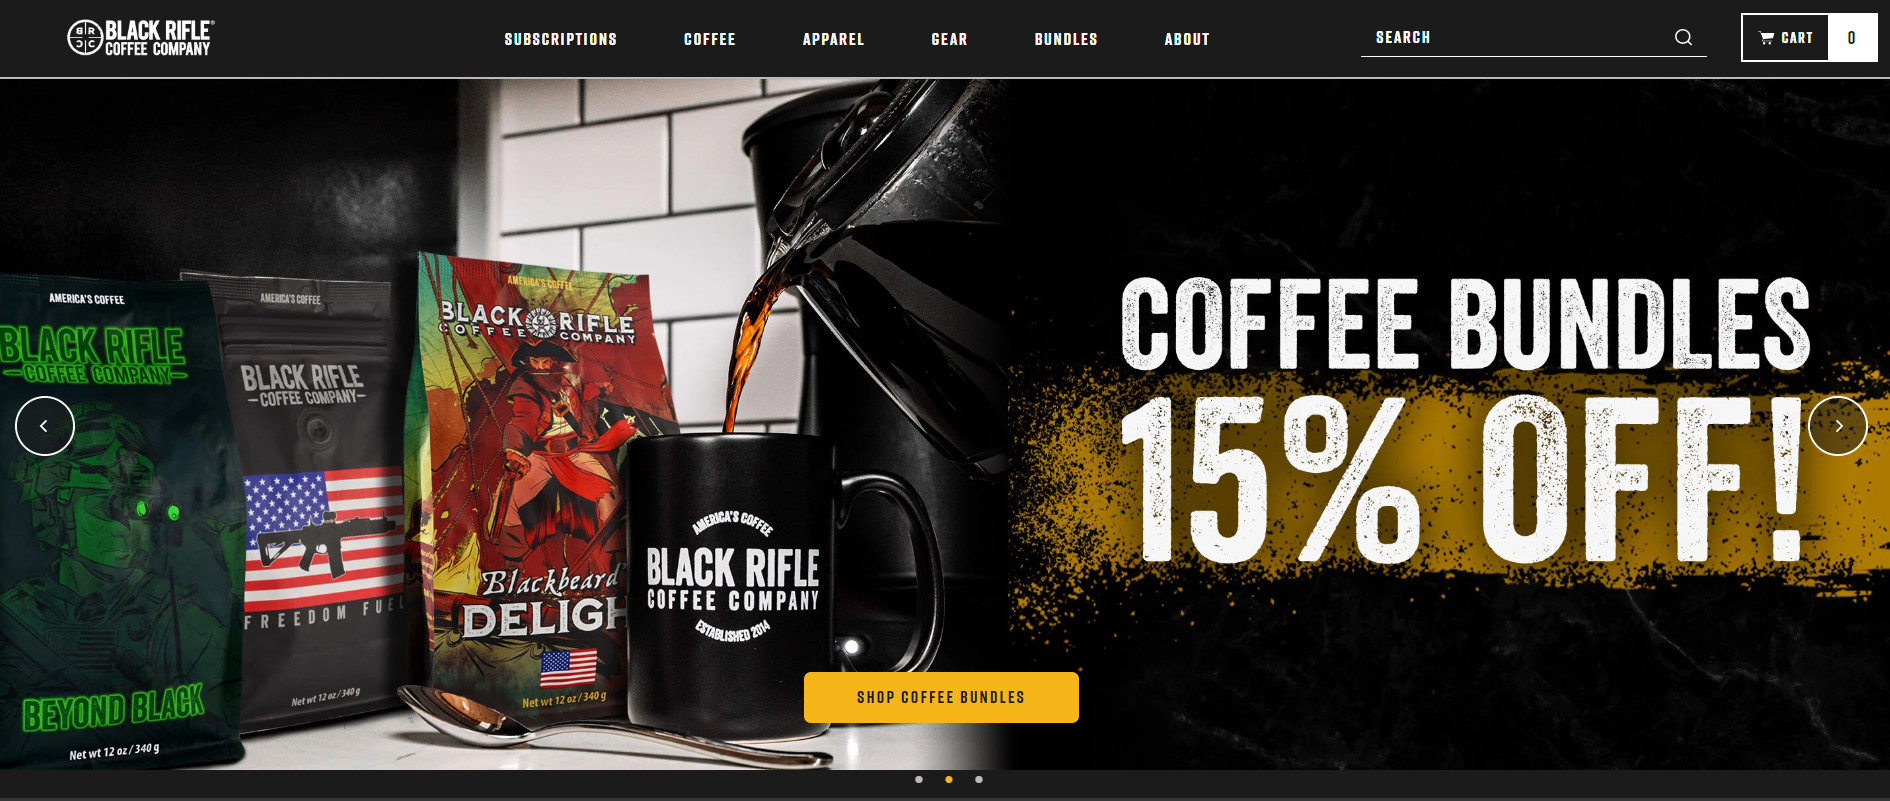 best coffee shop website example: Black Rifle Coffee Company